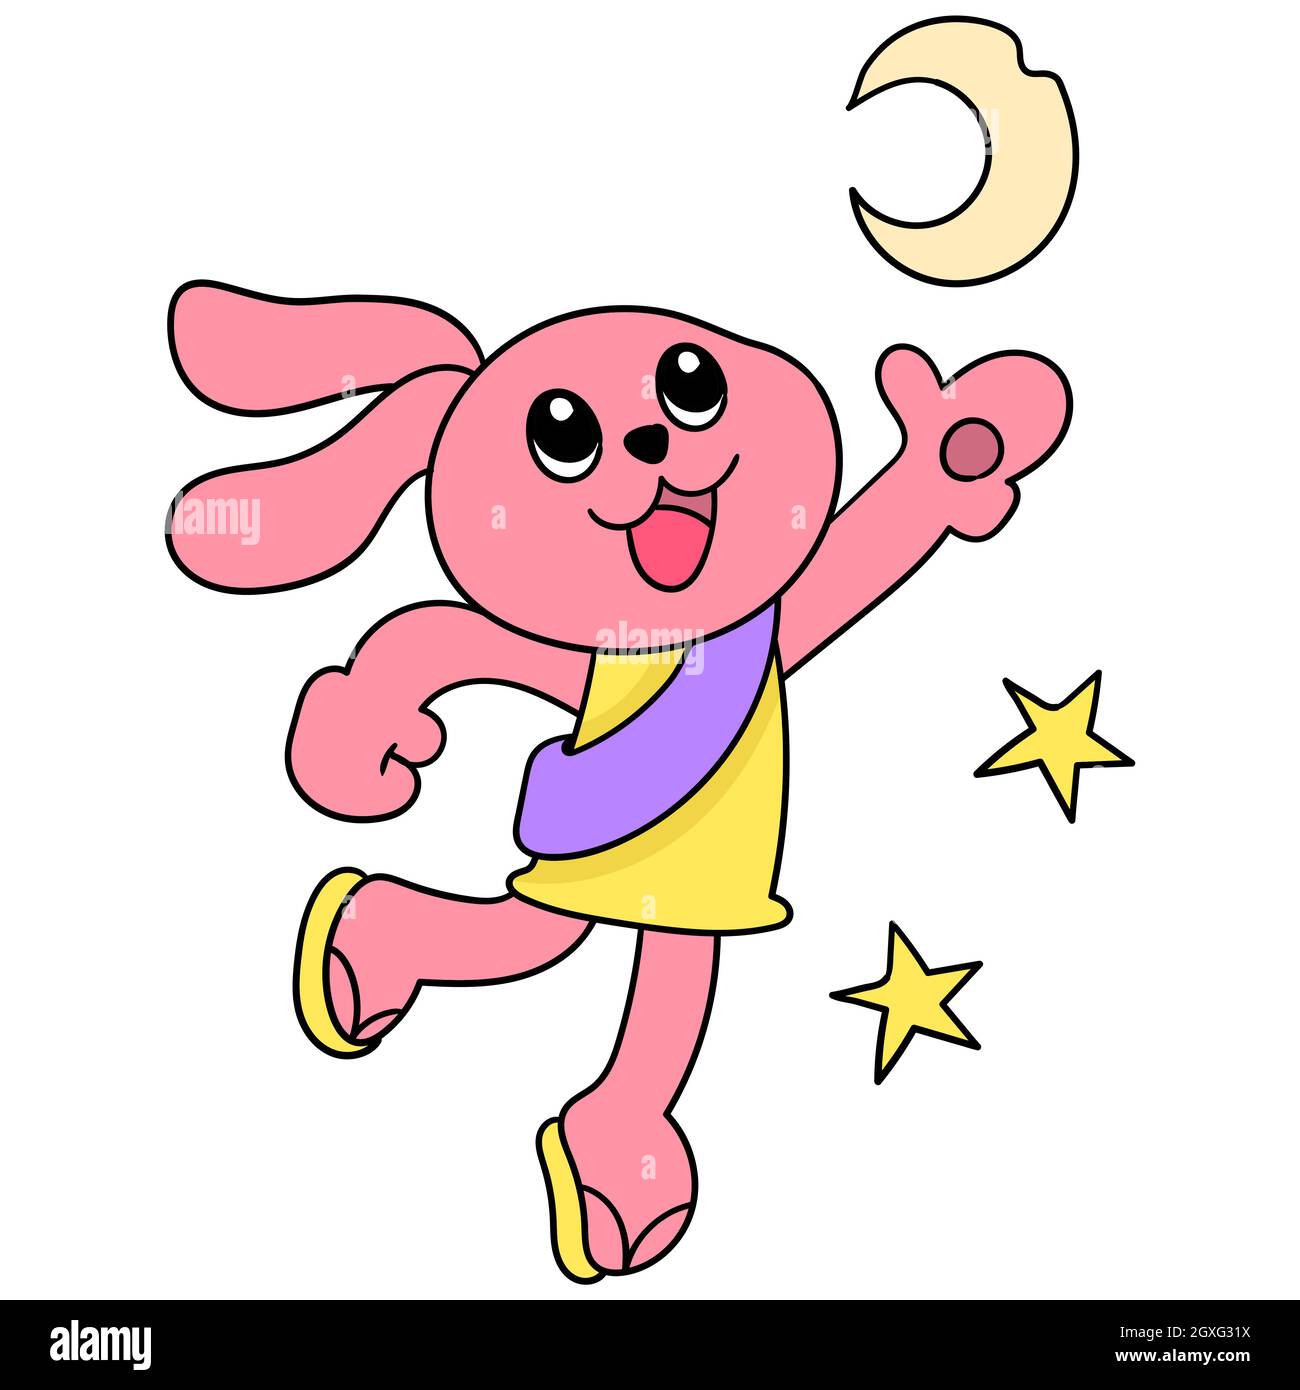 Das rosa Kaninchen freut sich, den heiligen Monat ramadan begrüßen zu dürfen Stock Vektor